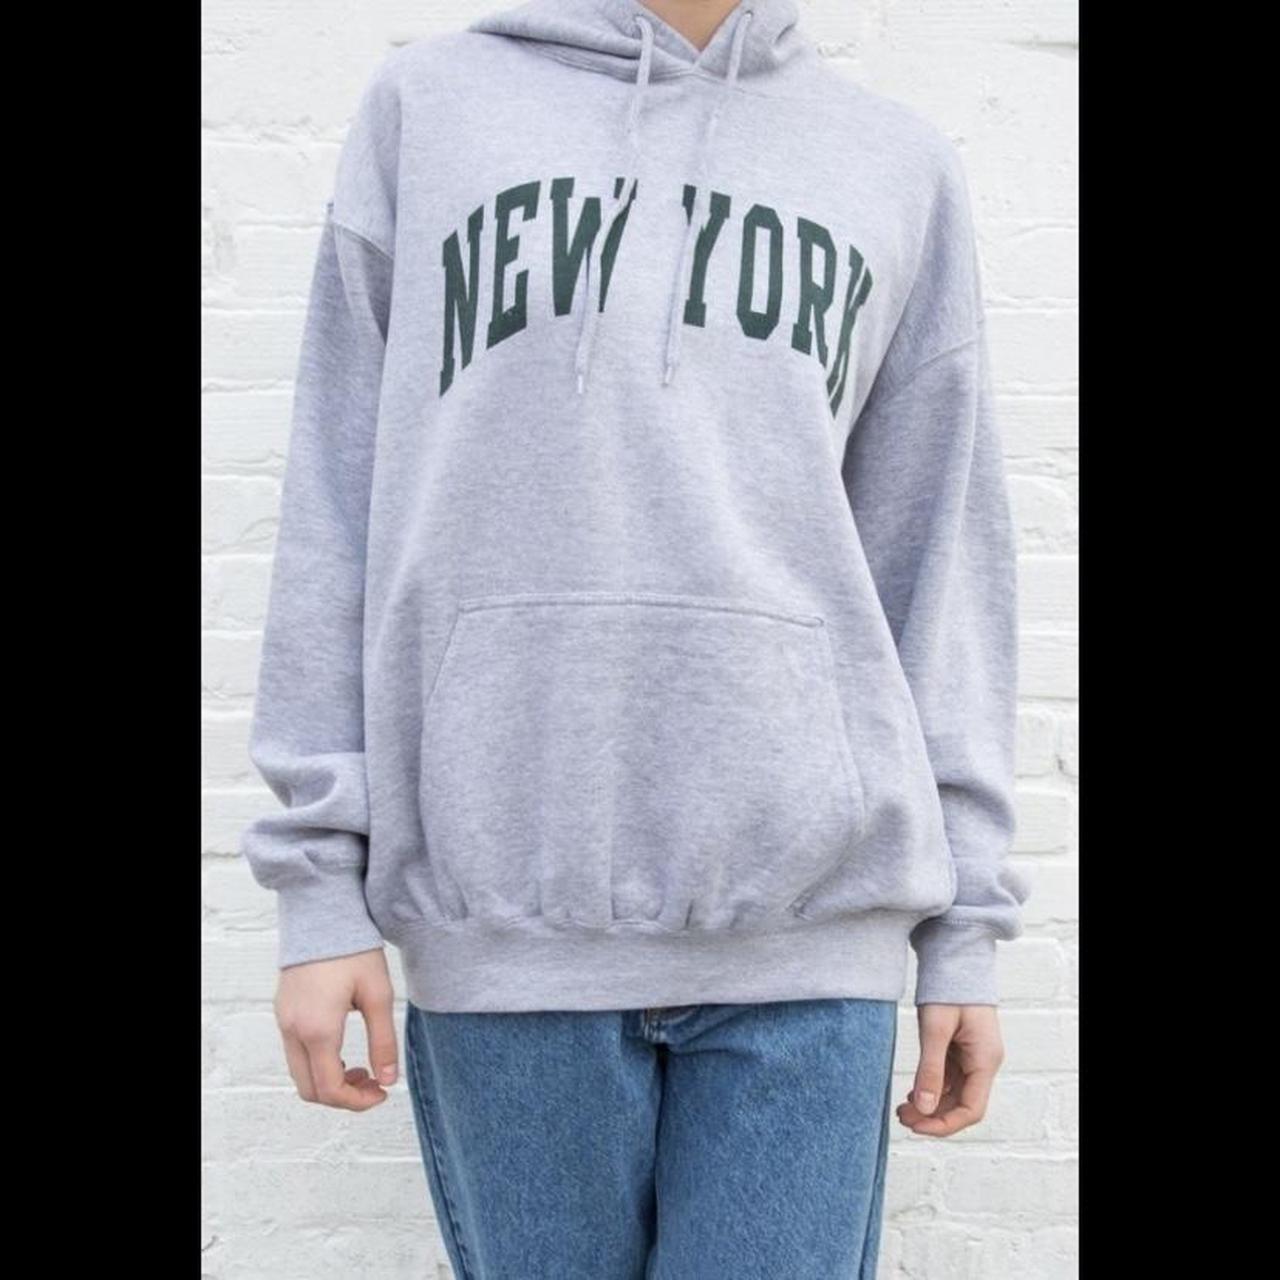 Brandy Melville New York Oversized Hoodie Gray - $38 (15% Off